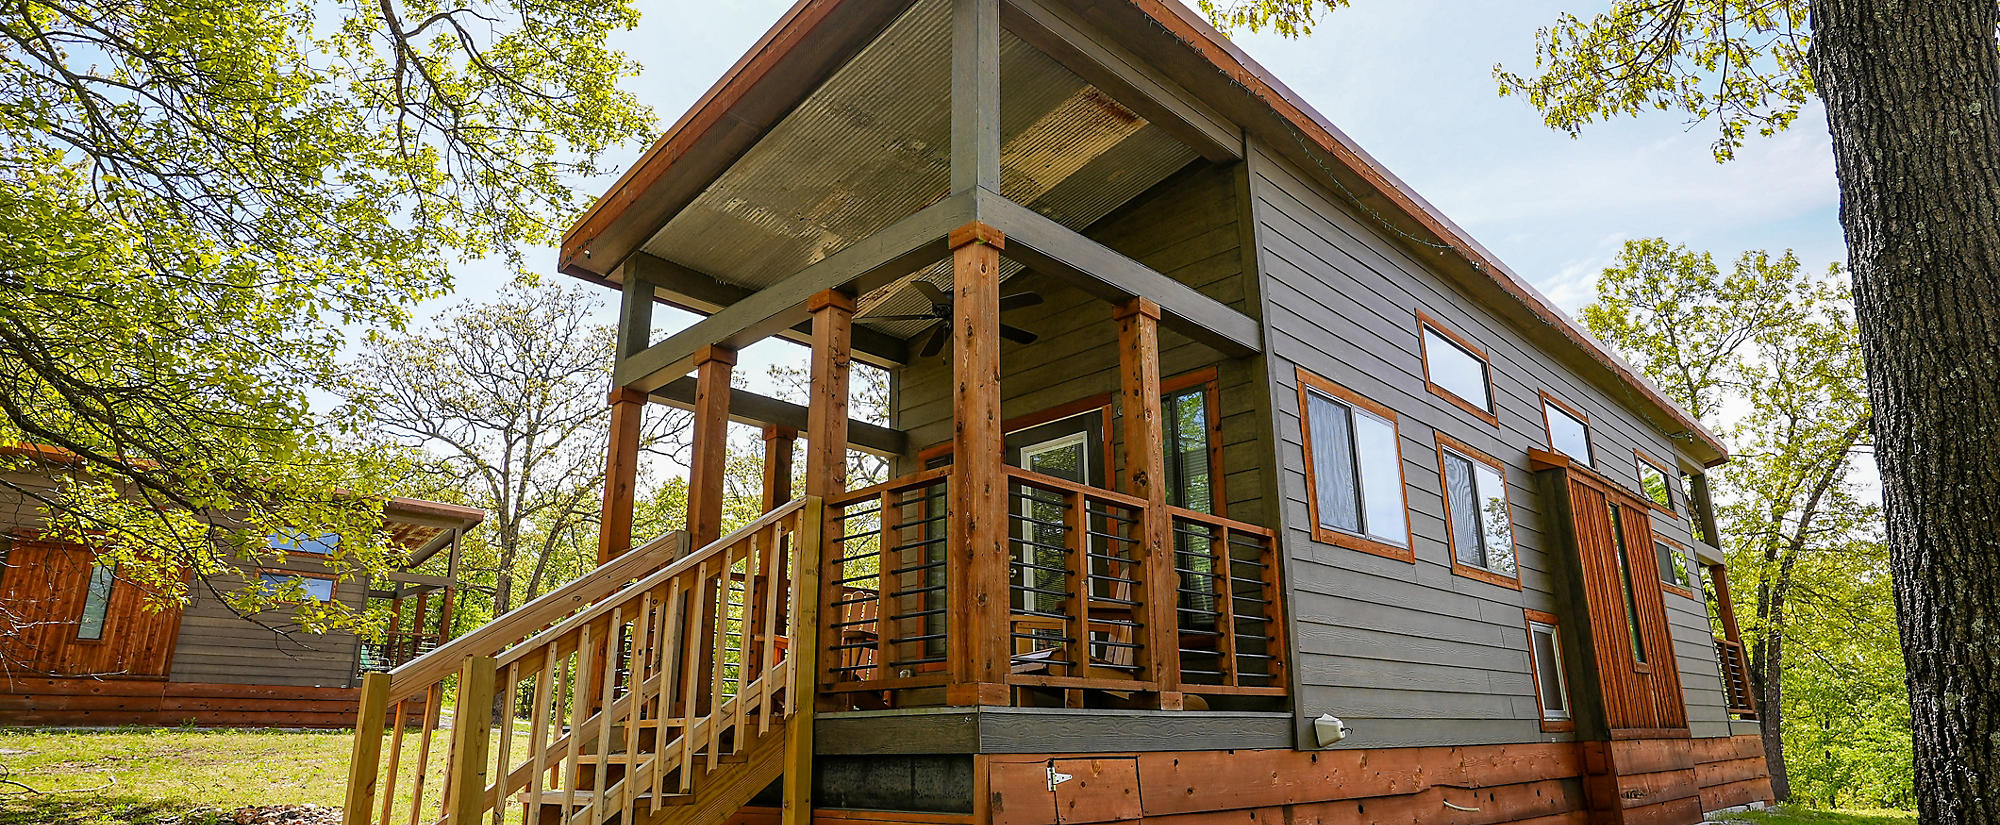 Branson Cedars Resort - cottage/tiny home